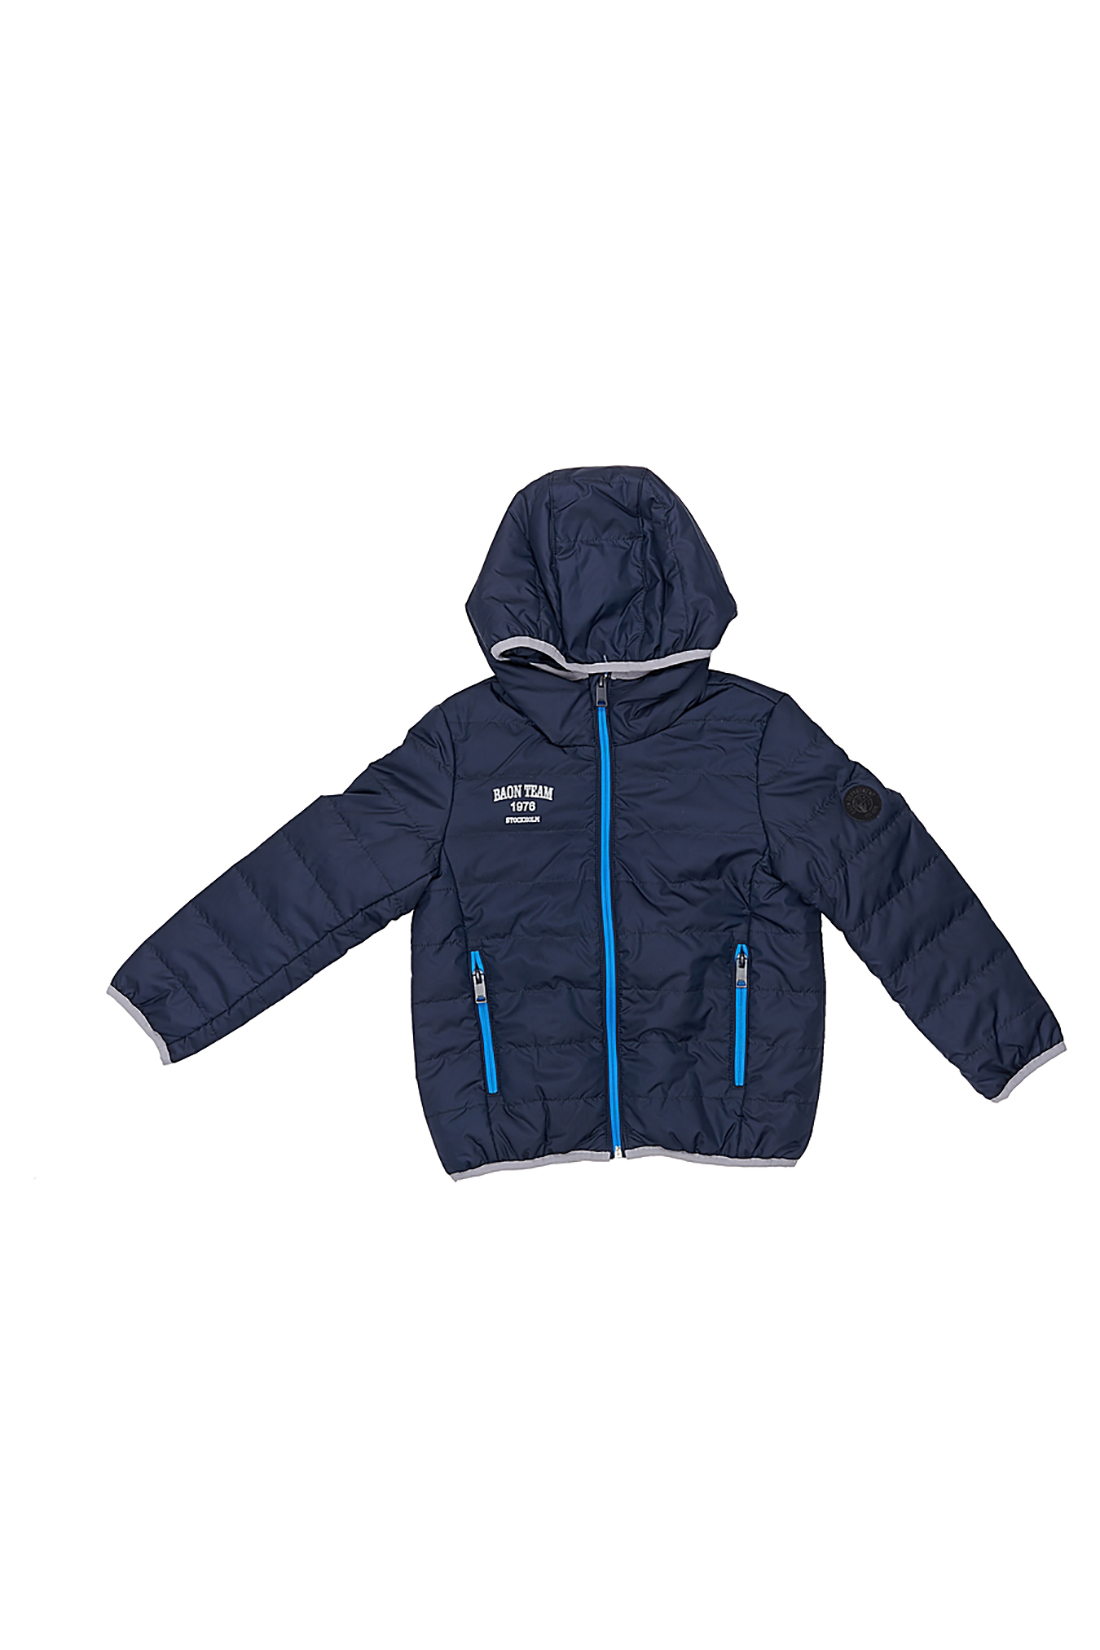 Куртка для мальчика (арт. baon BK538001), размер 110-116, цвет синий Куртка для мальчика (арт. baon BK538001) - фото 1